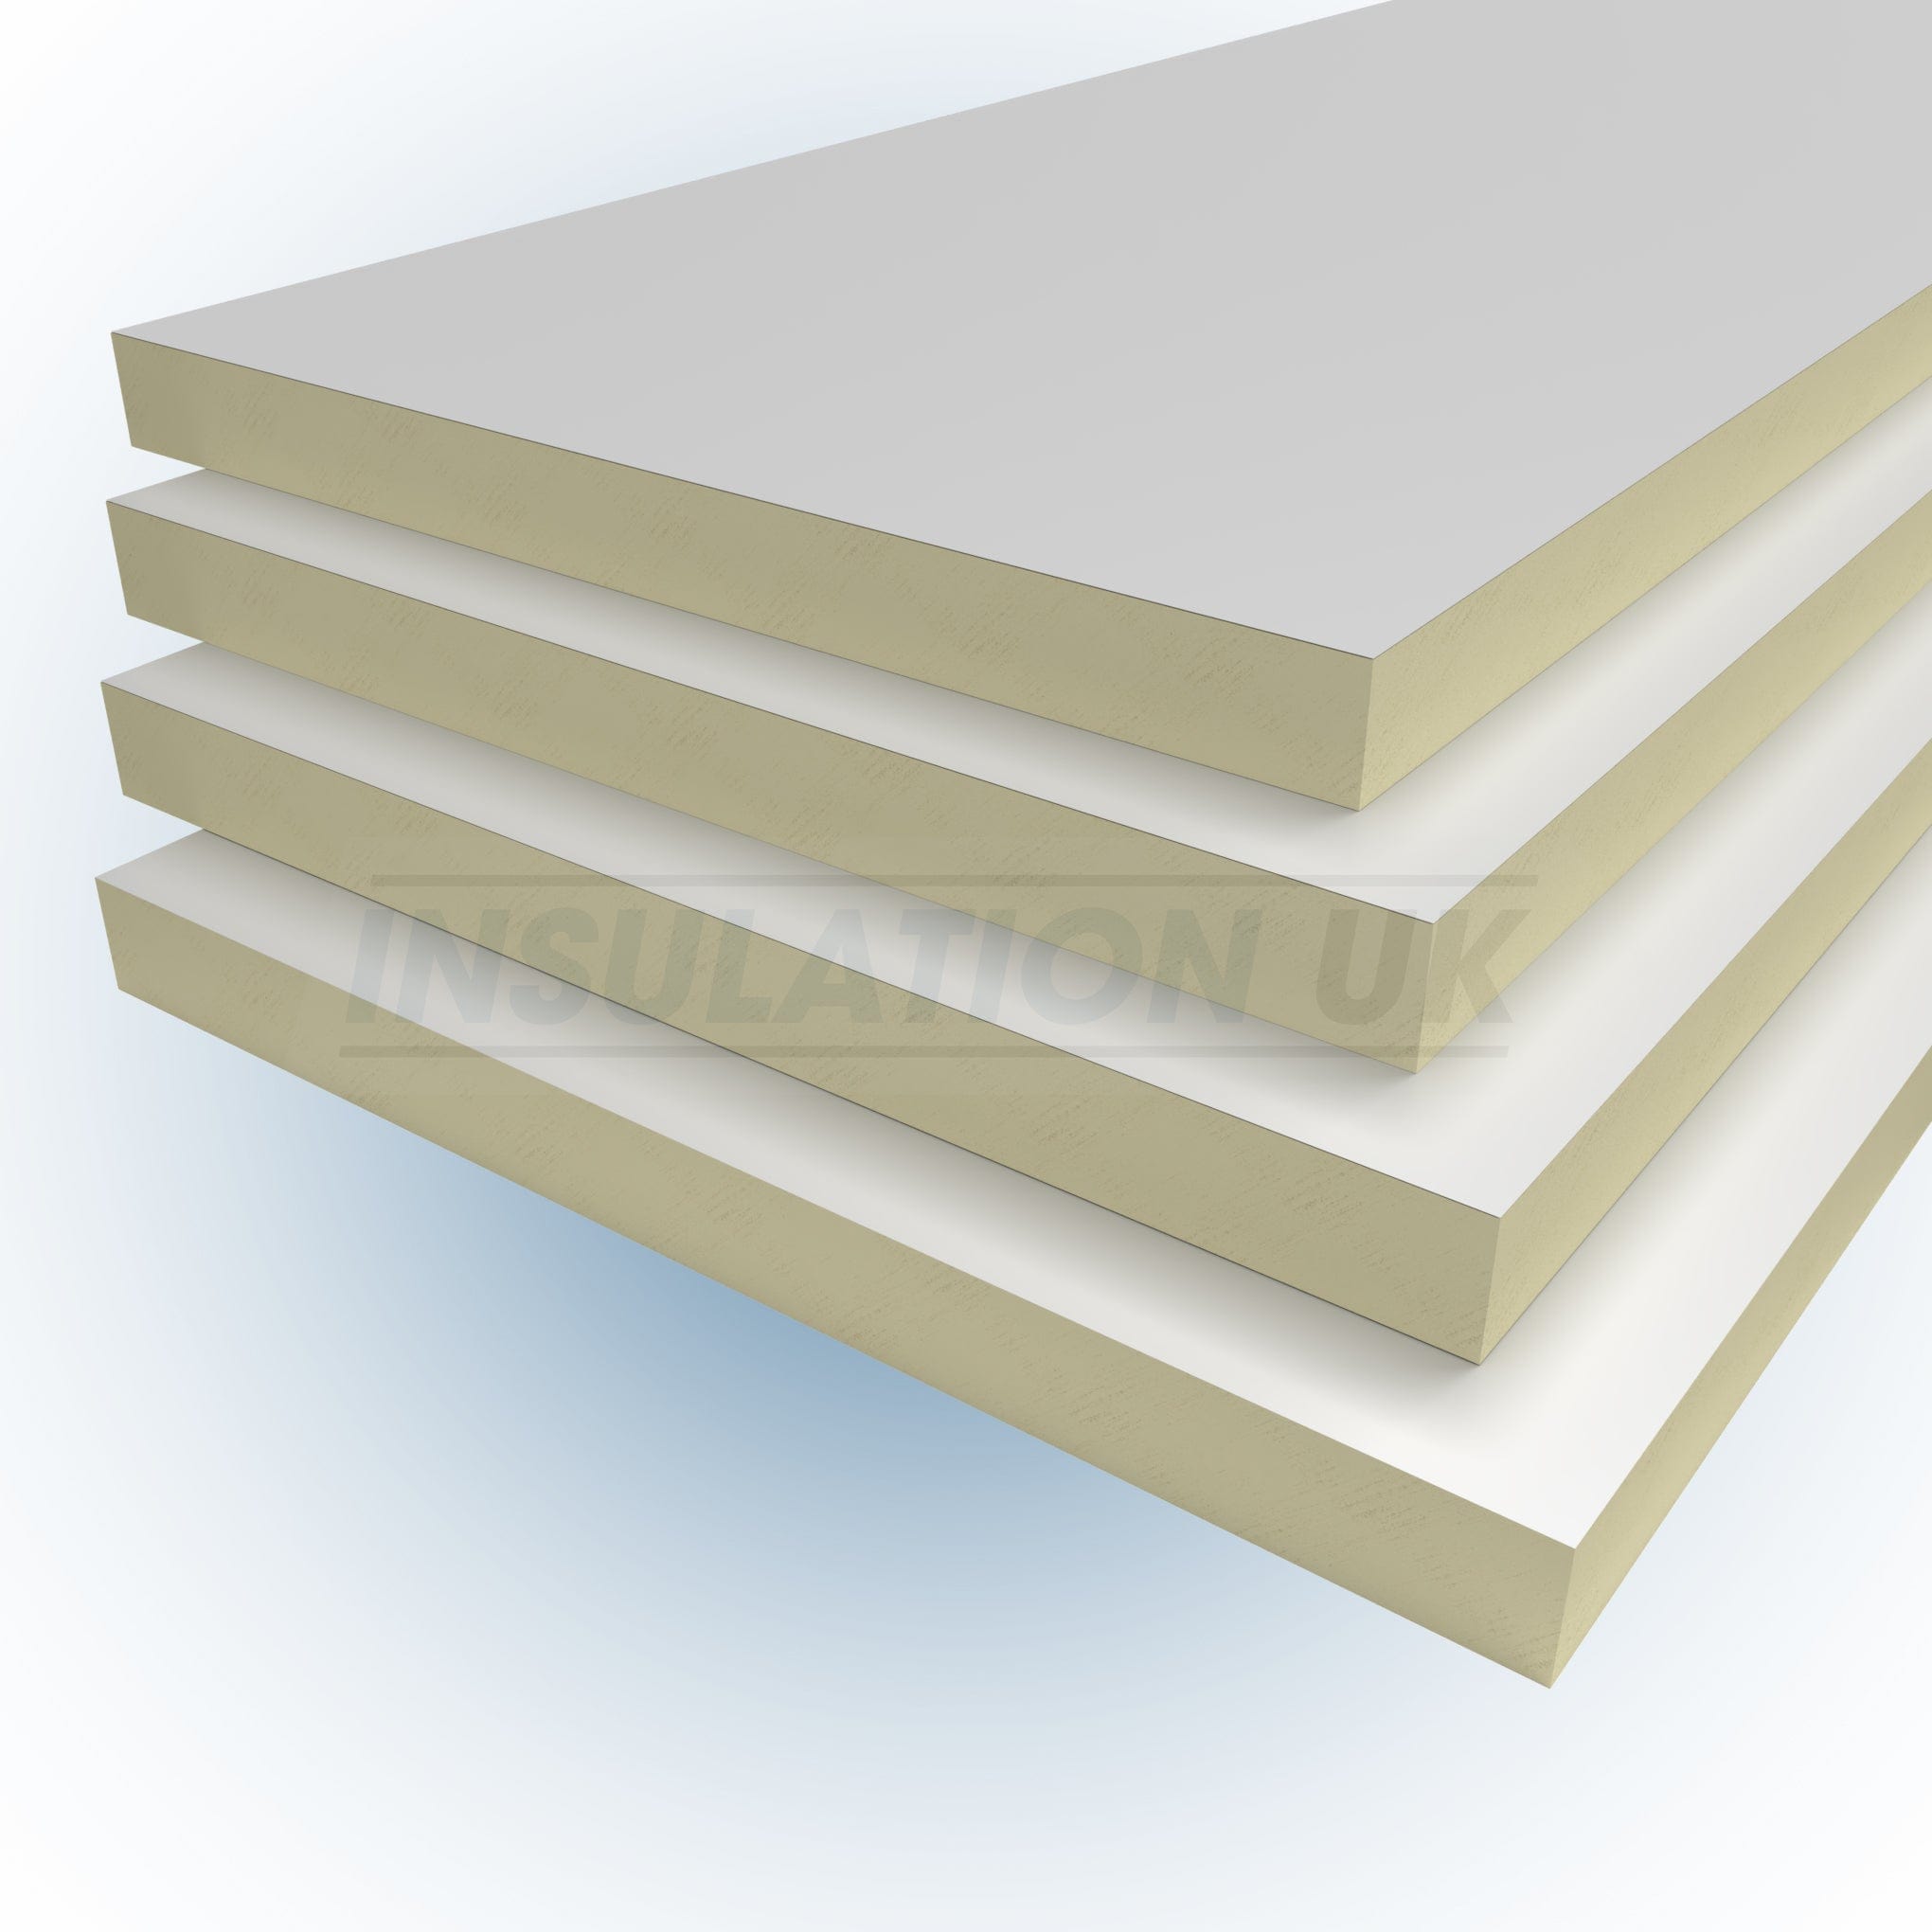 InsulationUK Pir Insulation Strips PIR Insulation Strips | 1200mm x 600mm | Pack of 4